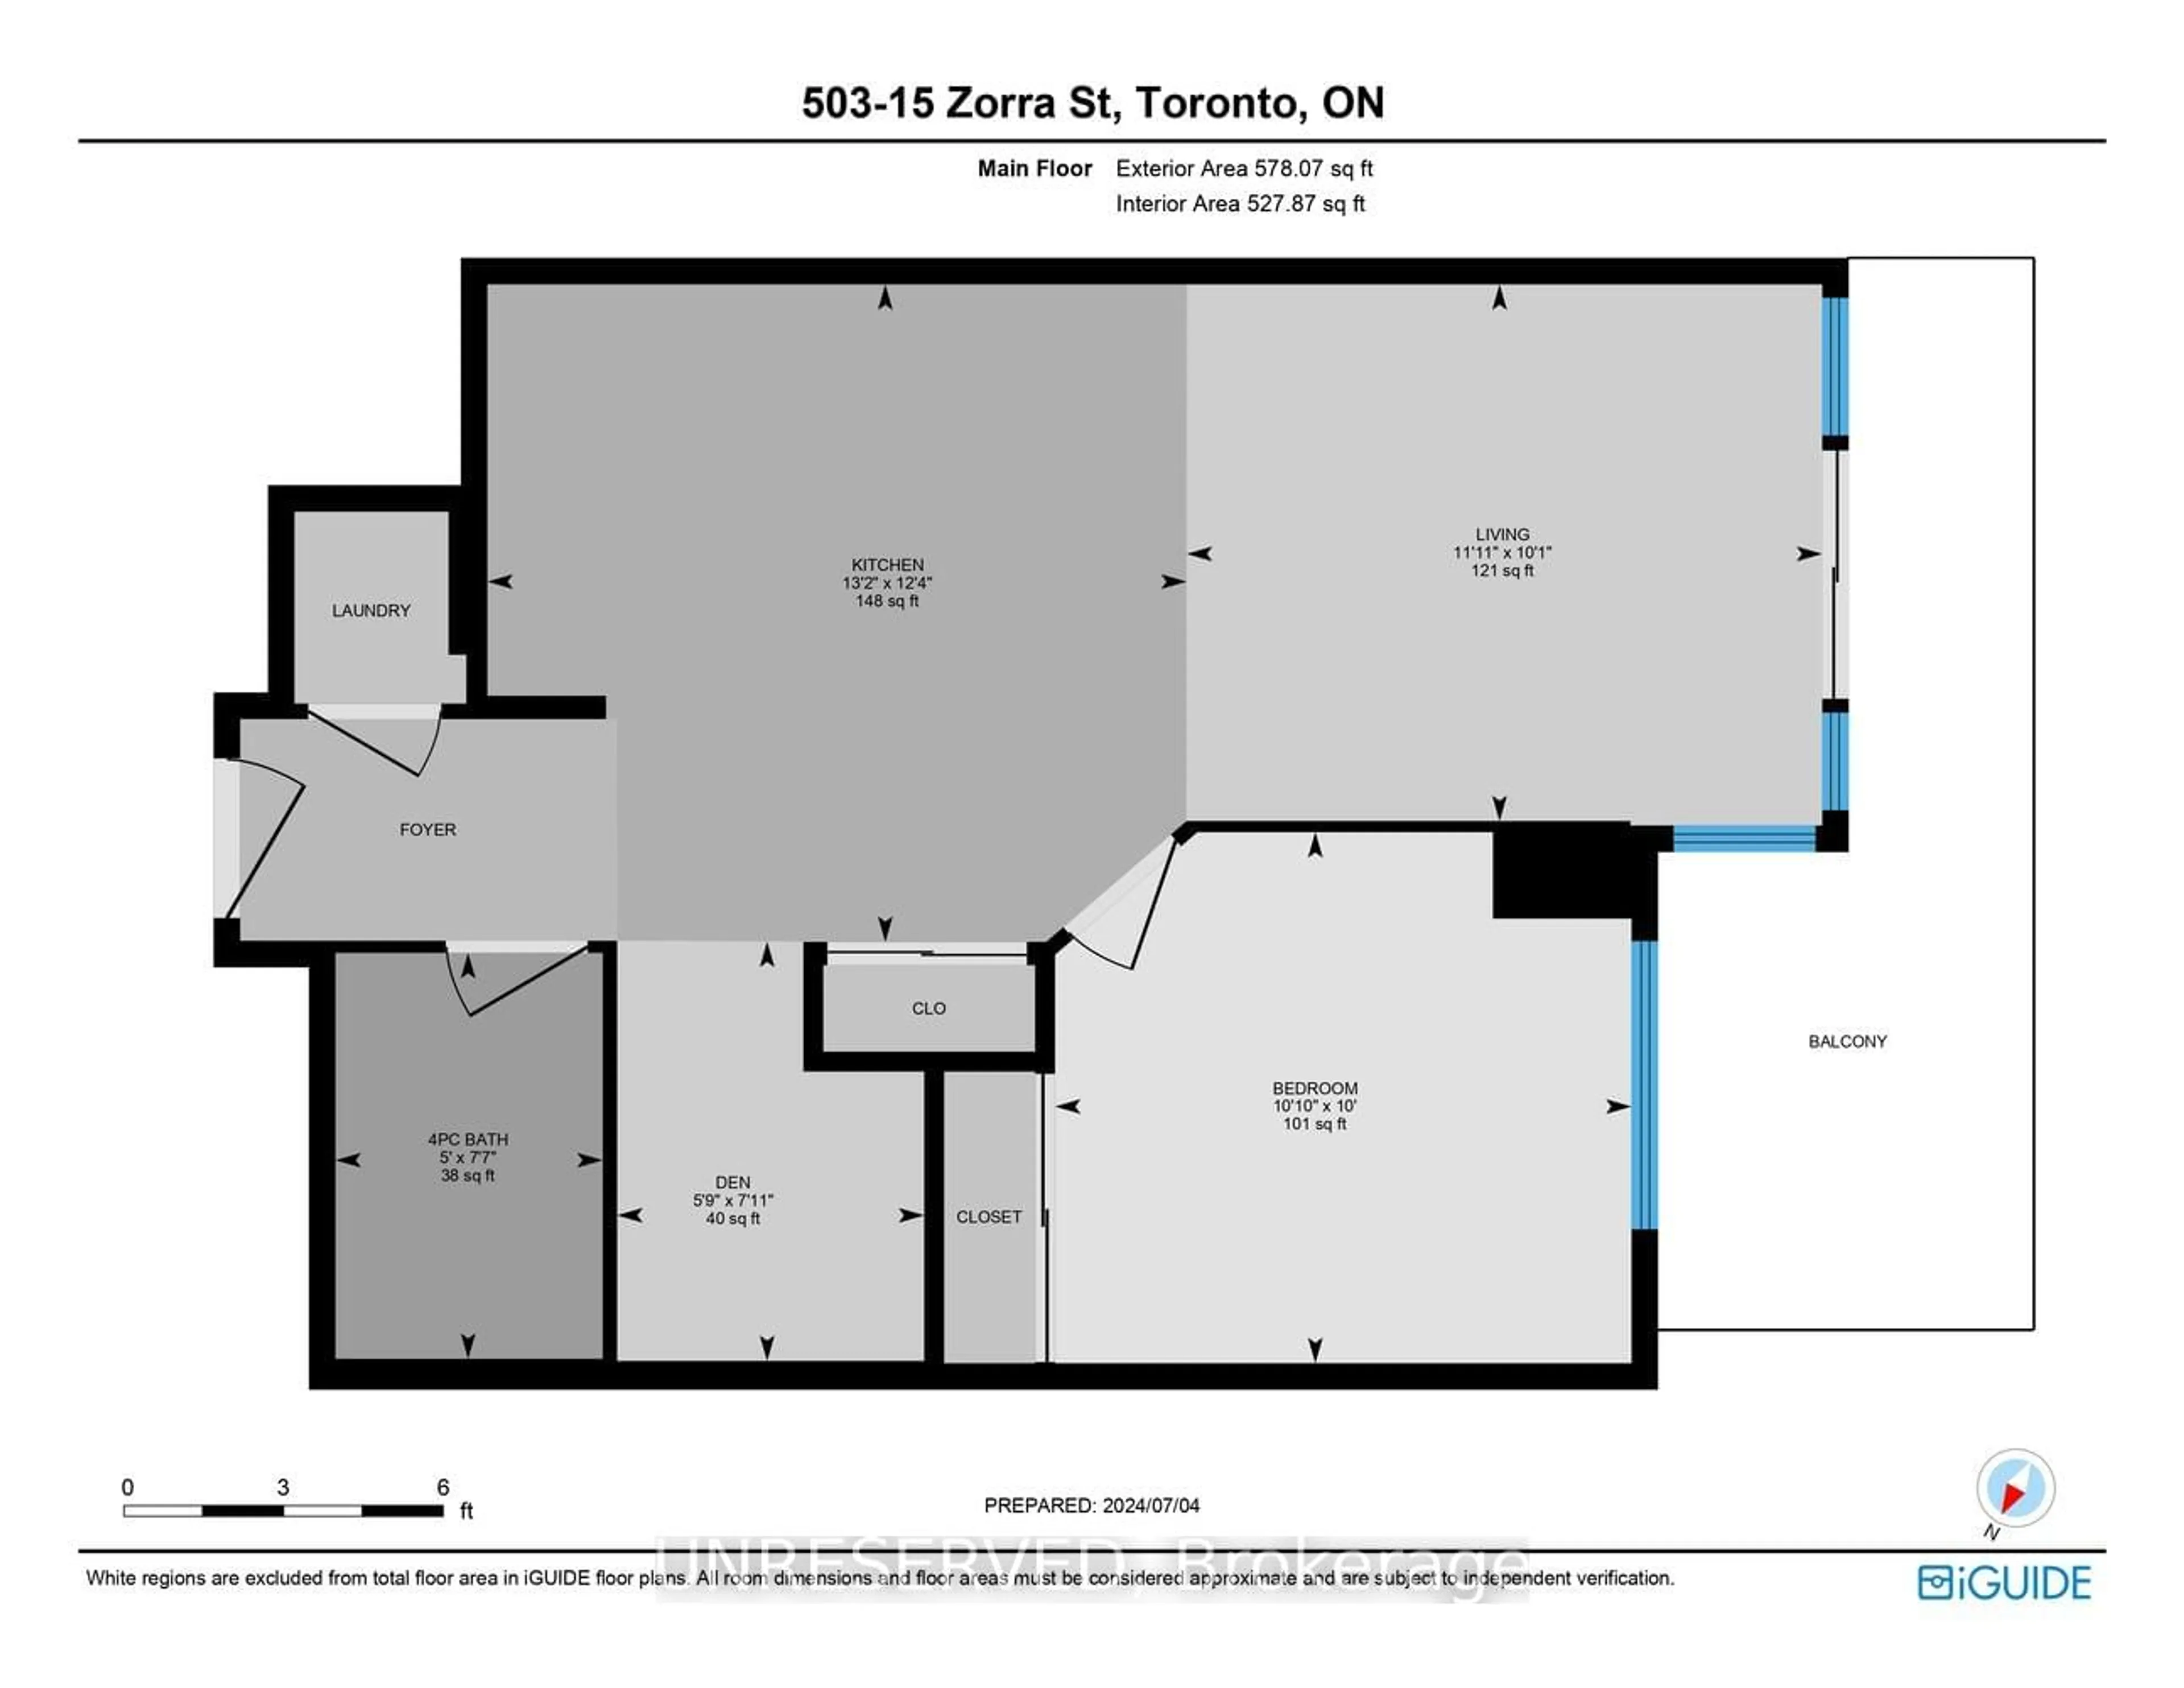 Floor plan for 15 Zorra St #503, Toronto Ontario M8Z 0C1